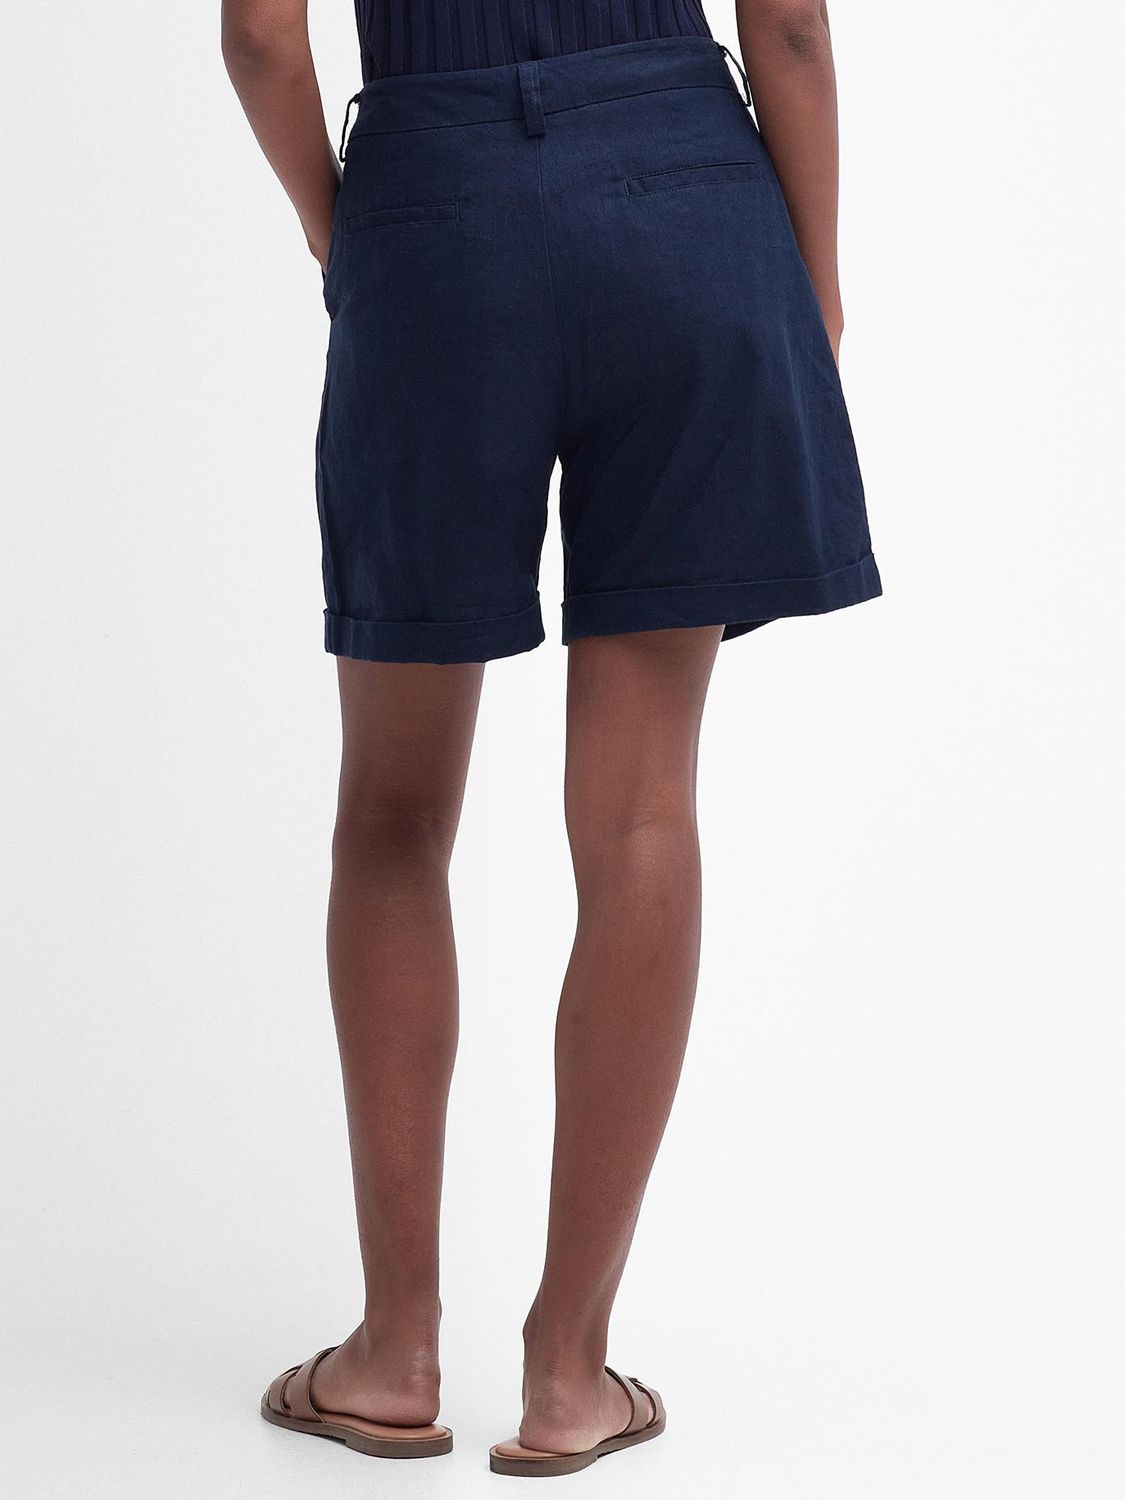 Barbour Darla Linen Blend Shorts, Navy, 10